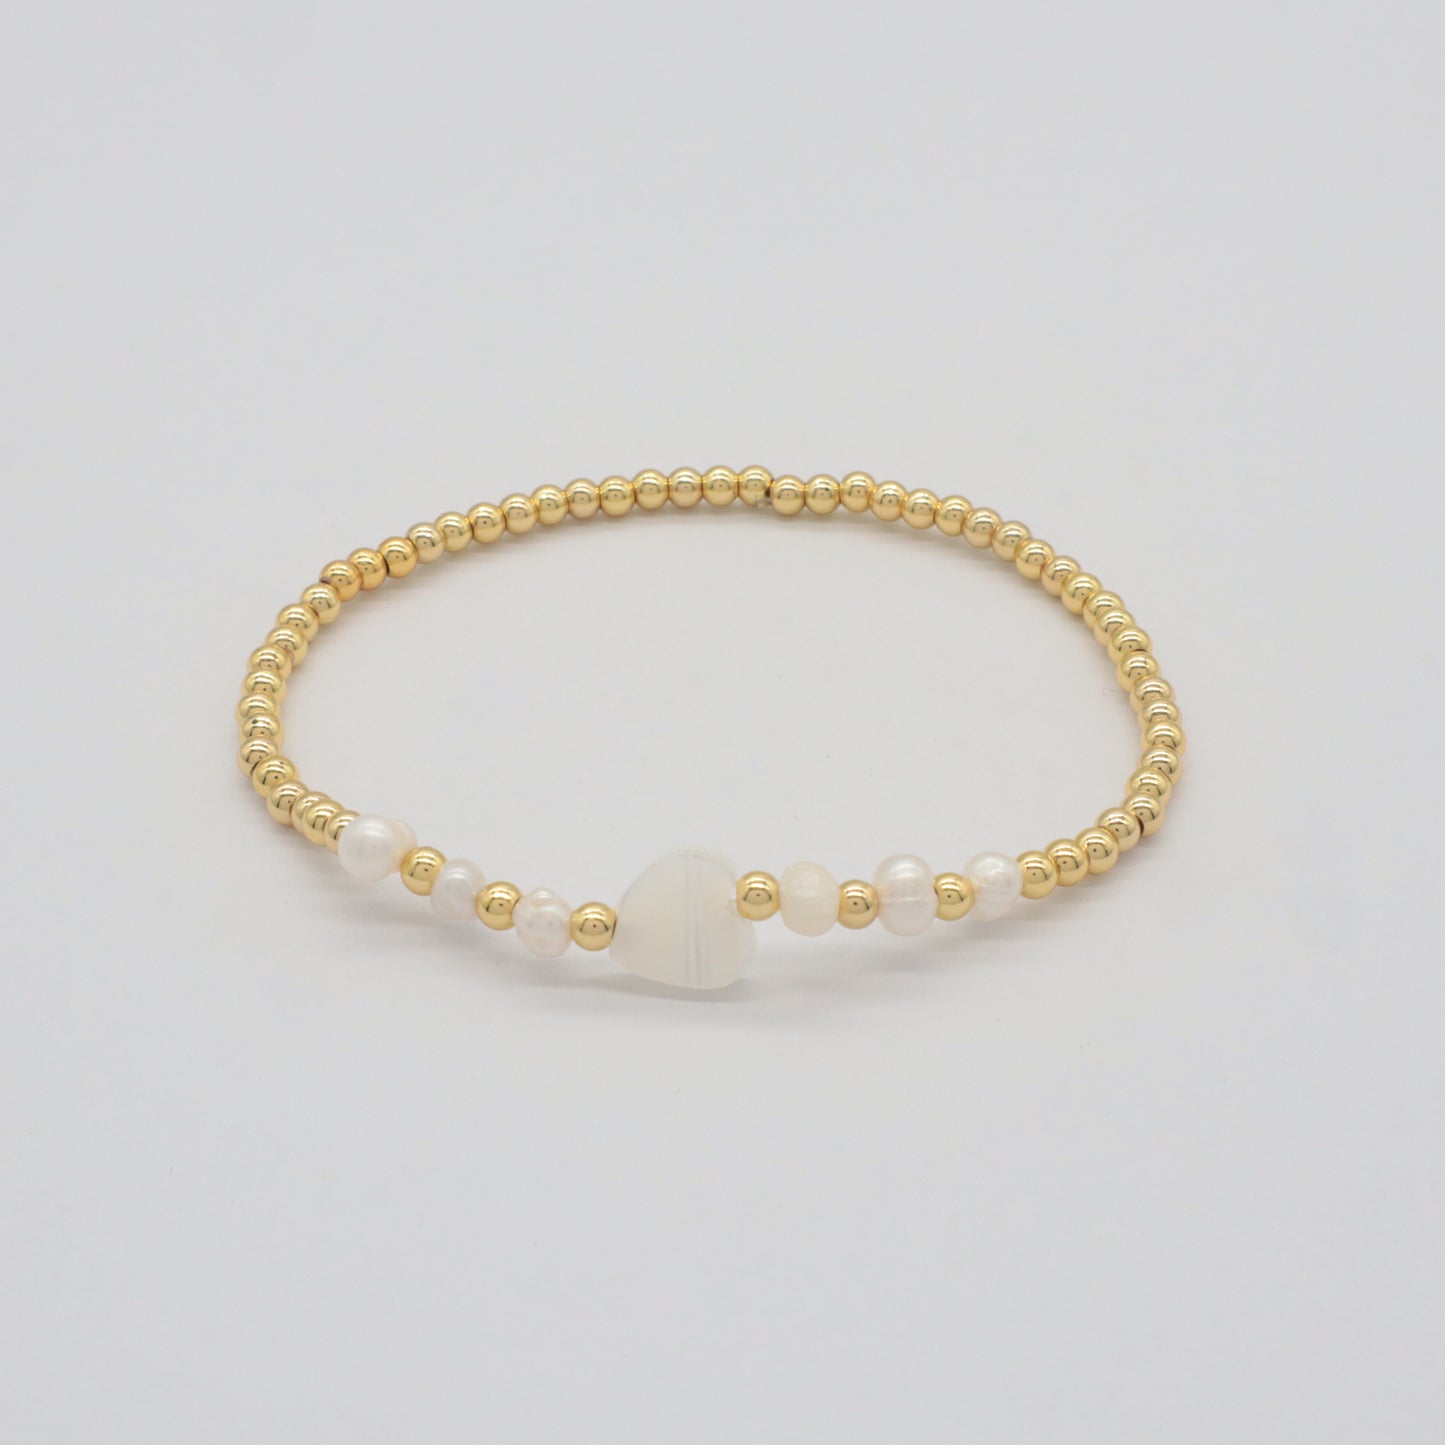 Handmade Wholesale Fashion Customized Factory Brass Steel Beads Fresh Water Pearl Heart Shell Charm Bracelet For Women Gift